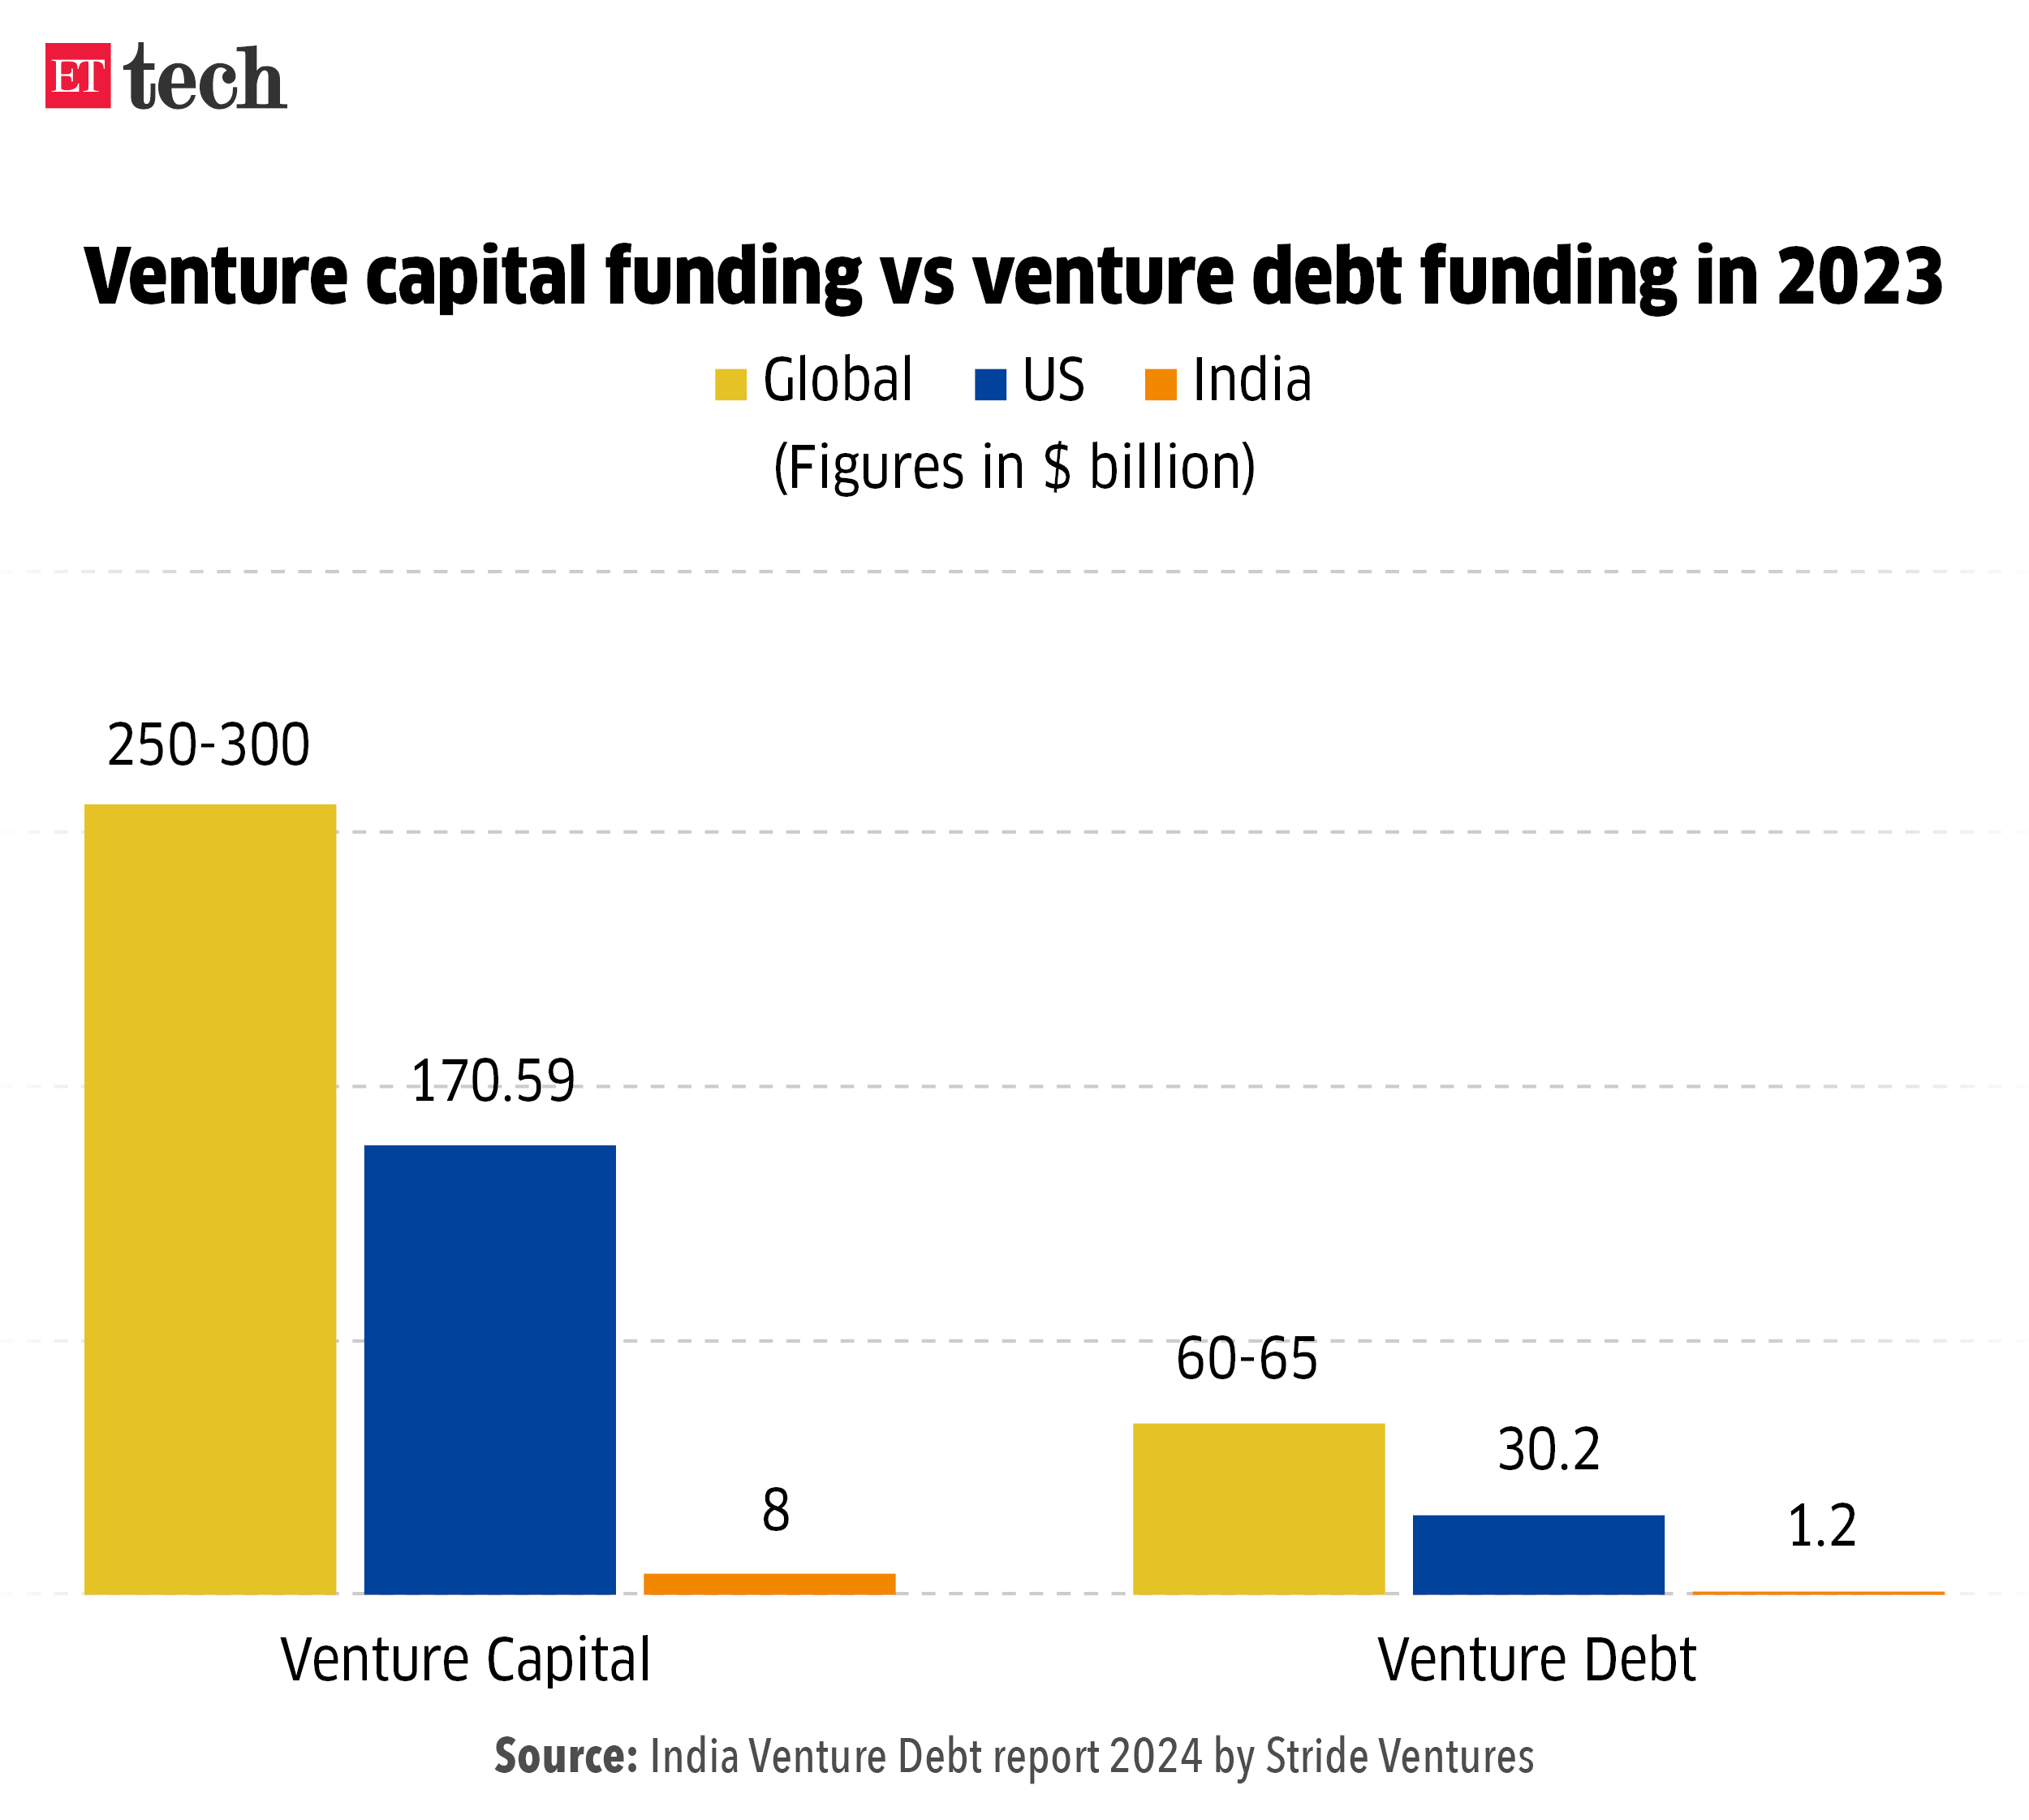 Venture capital funding